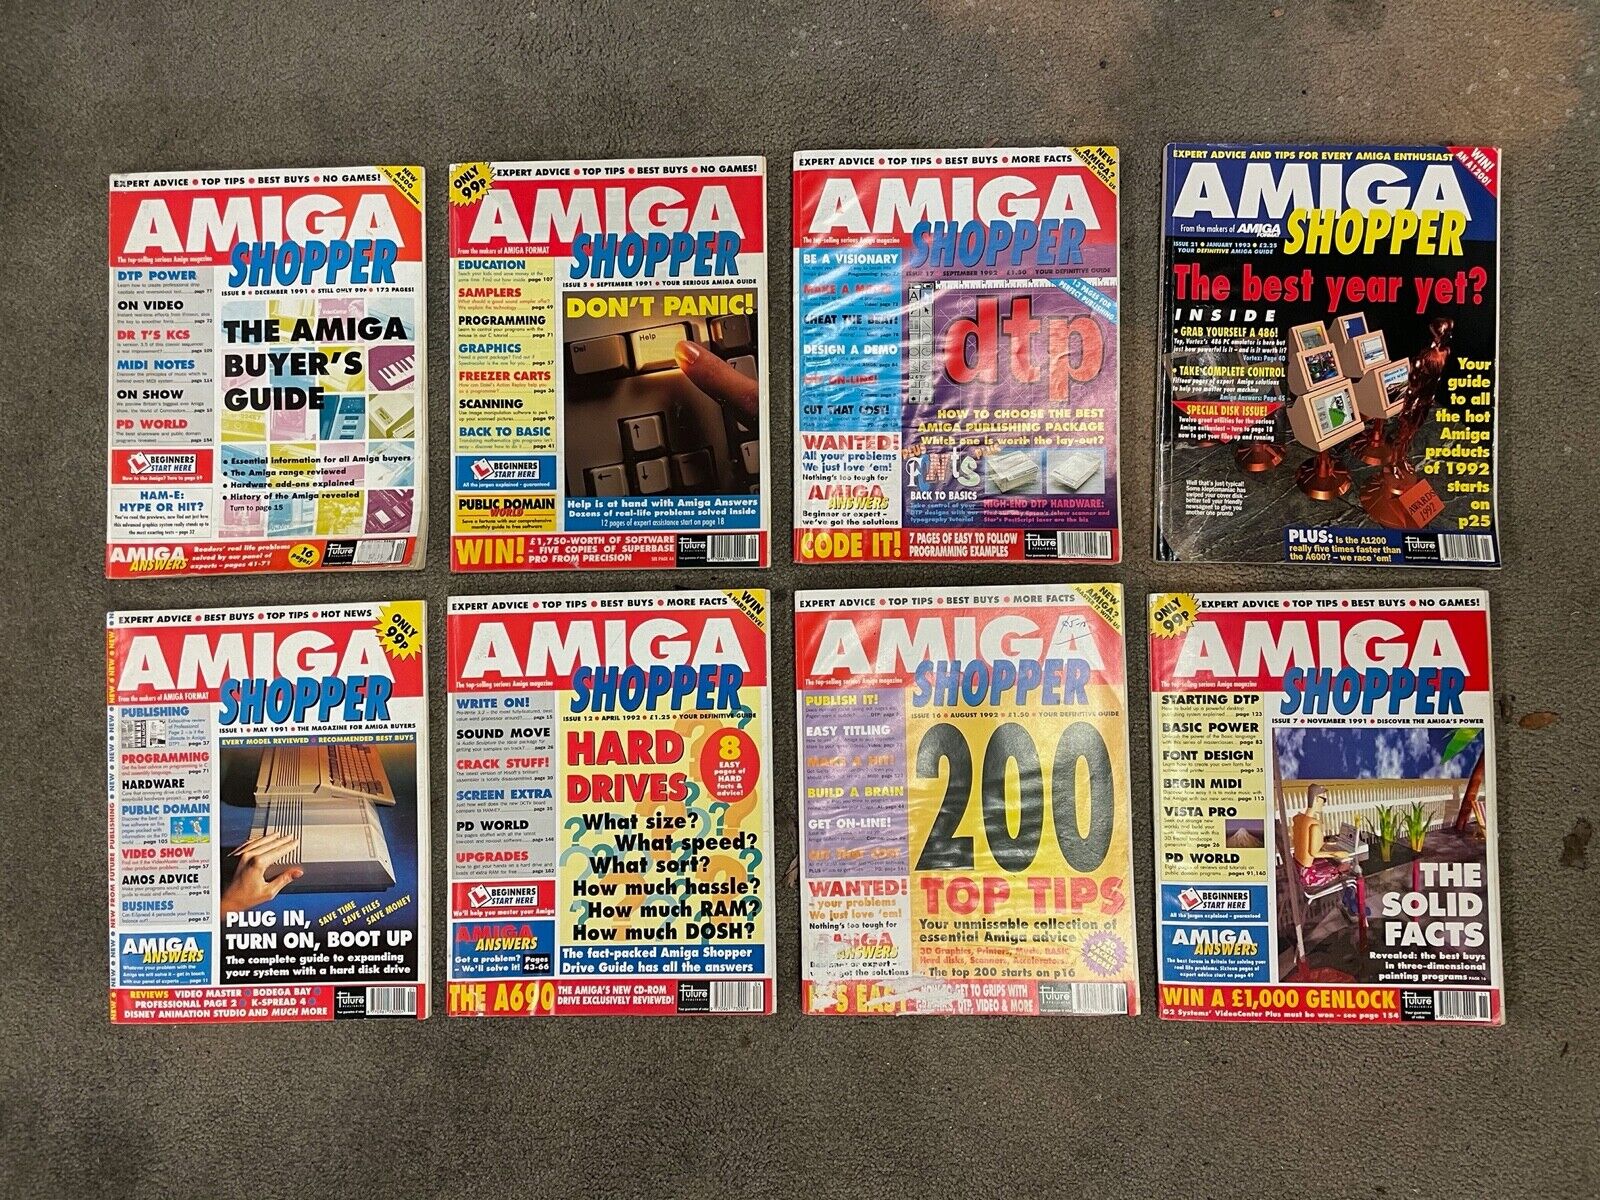 Amiga Shopper by Amiga Format magazines